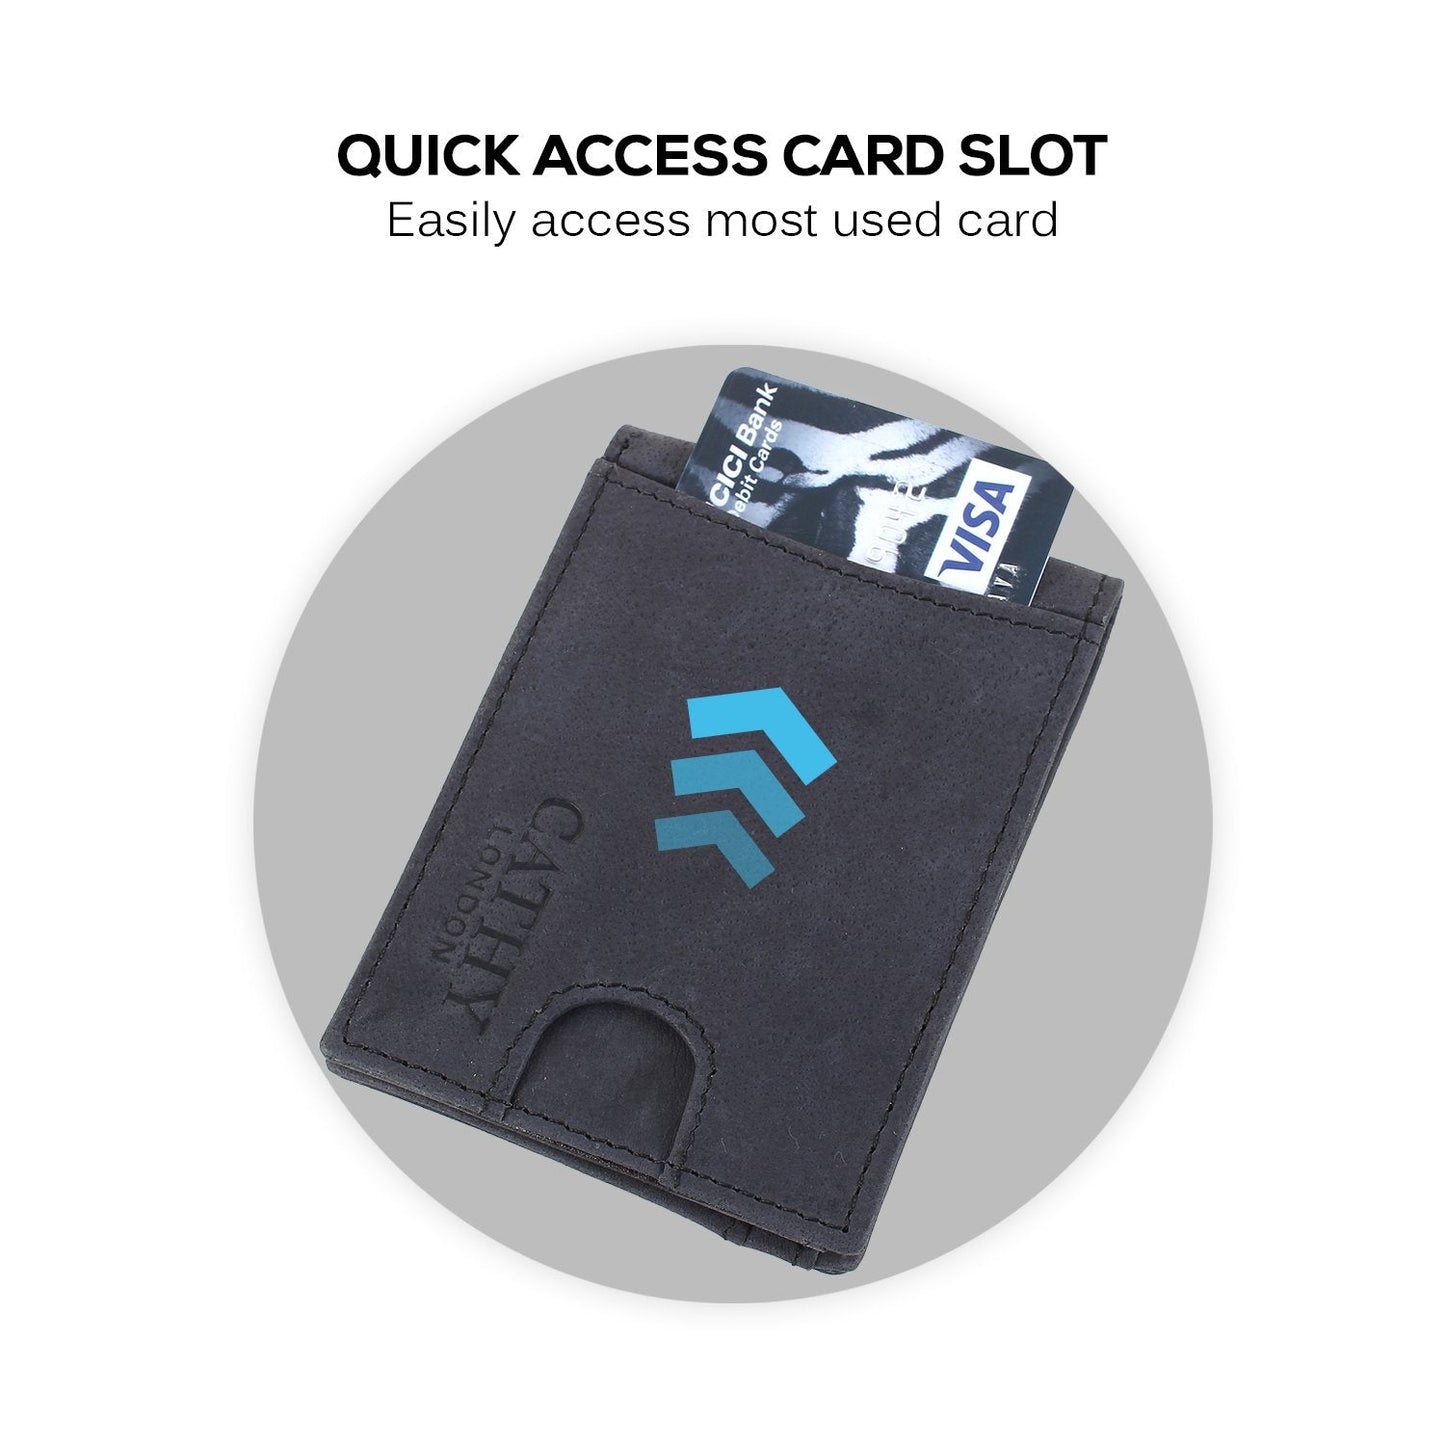 Black Colour Bi-Fold Italian Leather Money Clip Card Holder/Slim Wallet (6 Cards + 1 ID Slot + Cash Compartment )